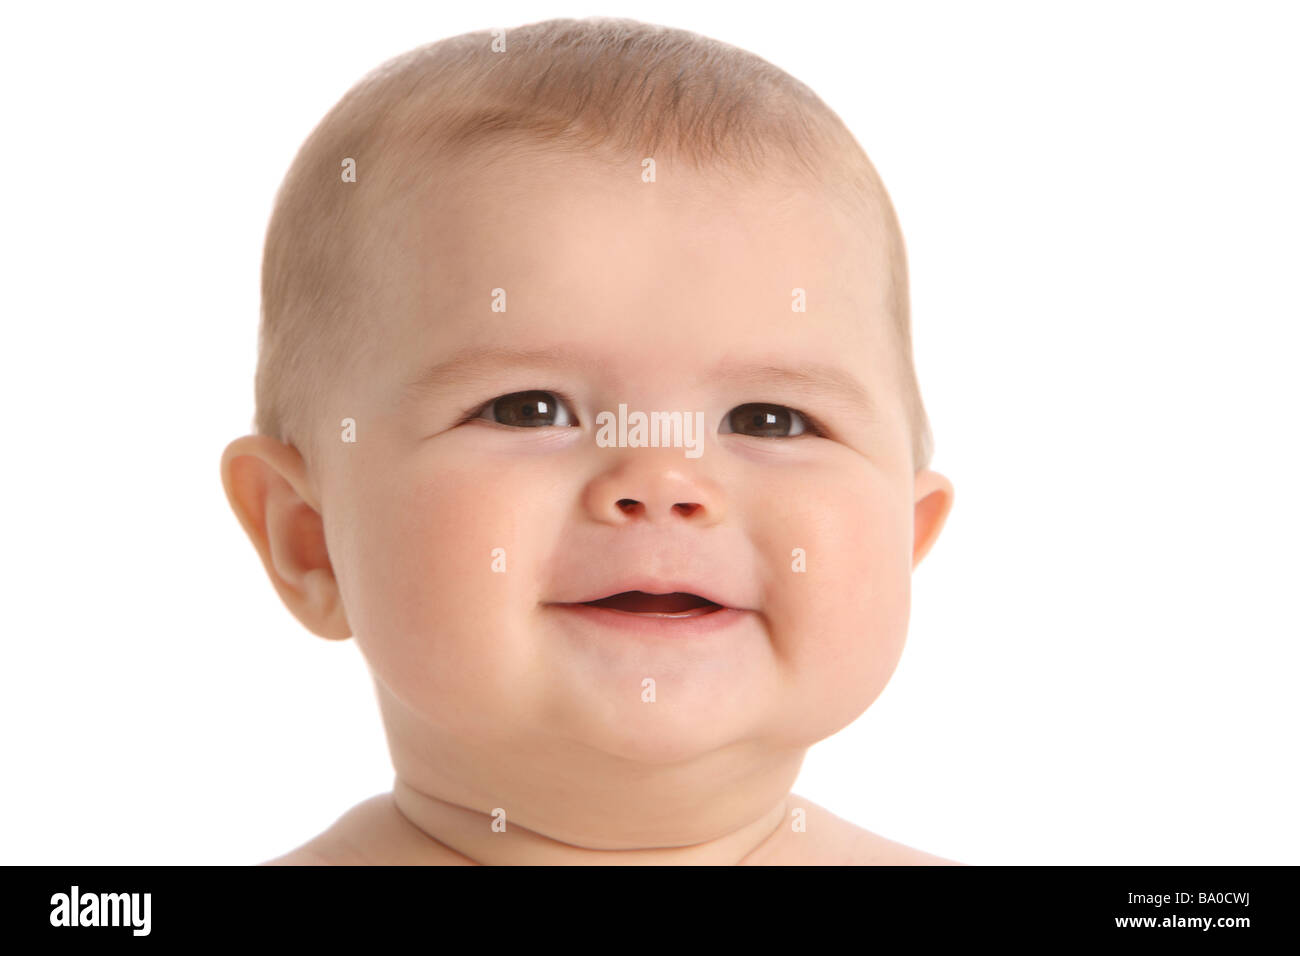 Baby closeup on white background Stock Photo